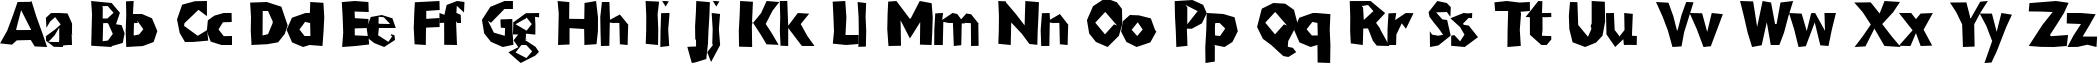 Пример написания английского алфавита шрифтом ChunkoBlockoThinner